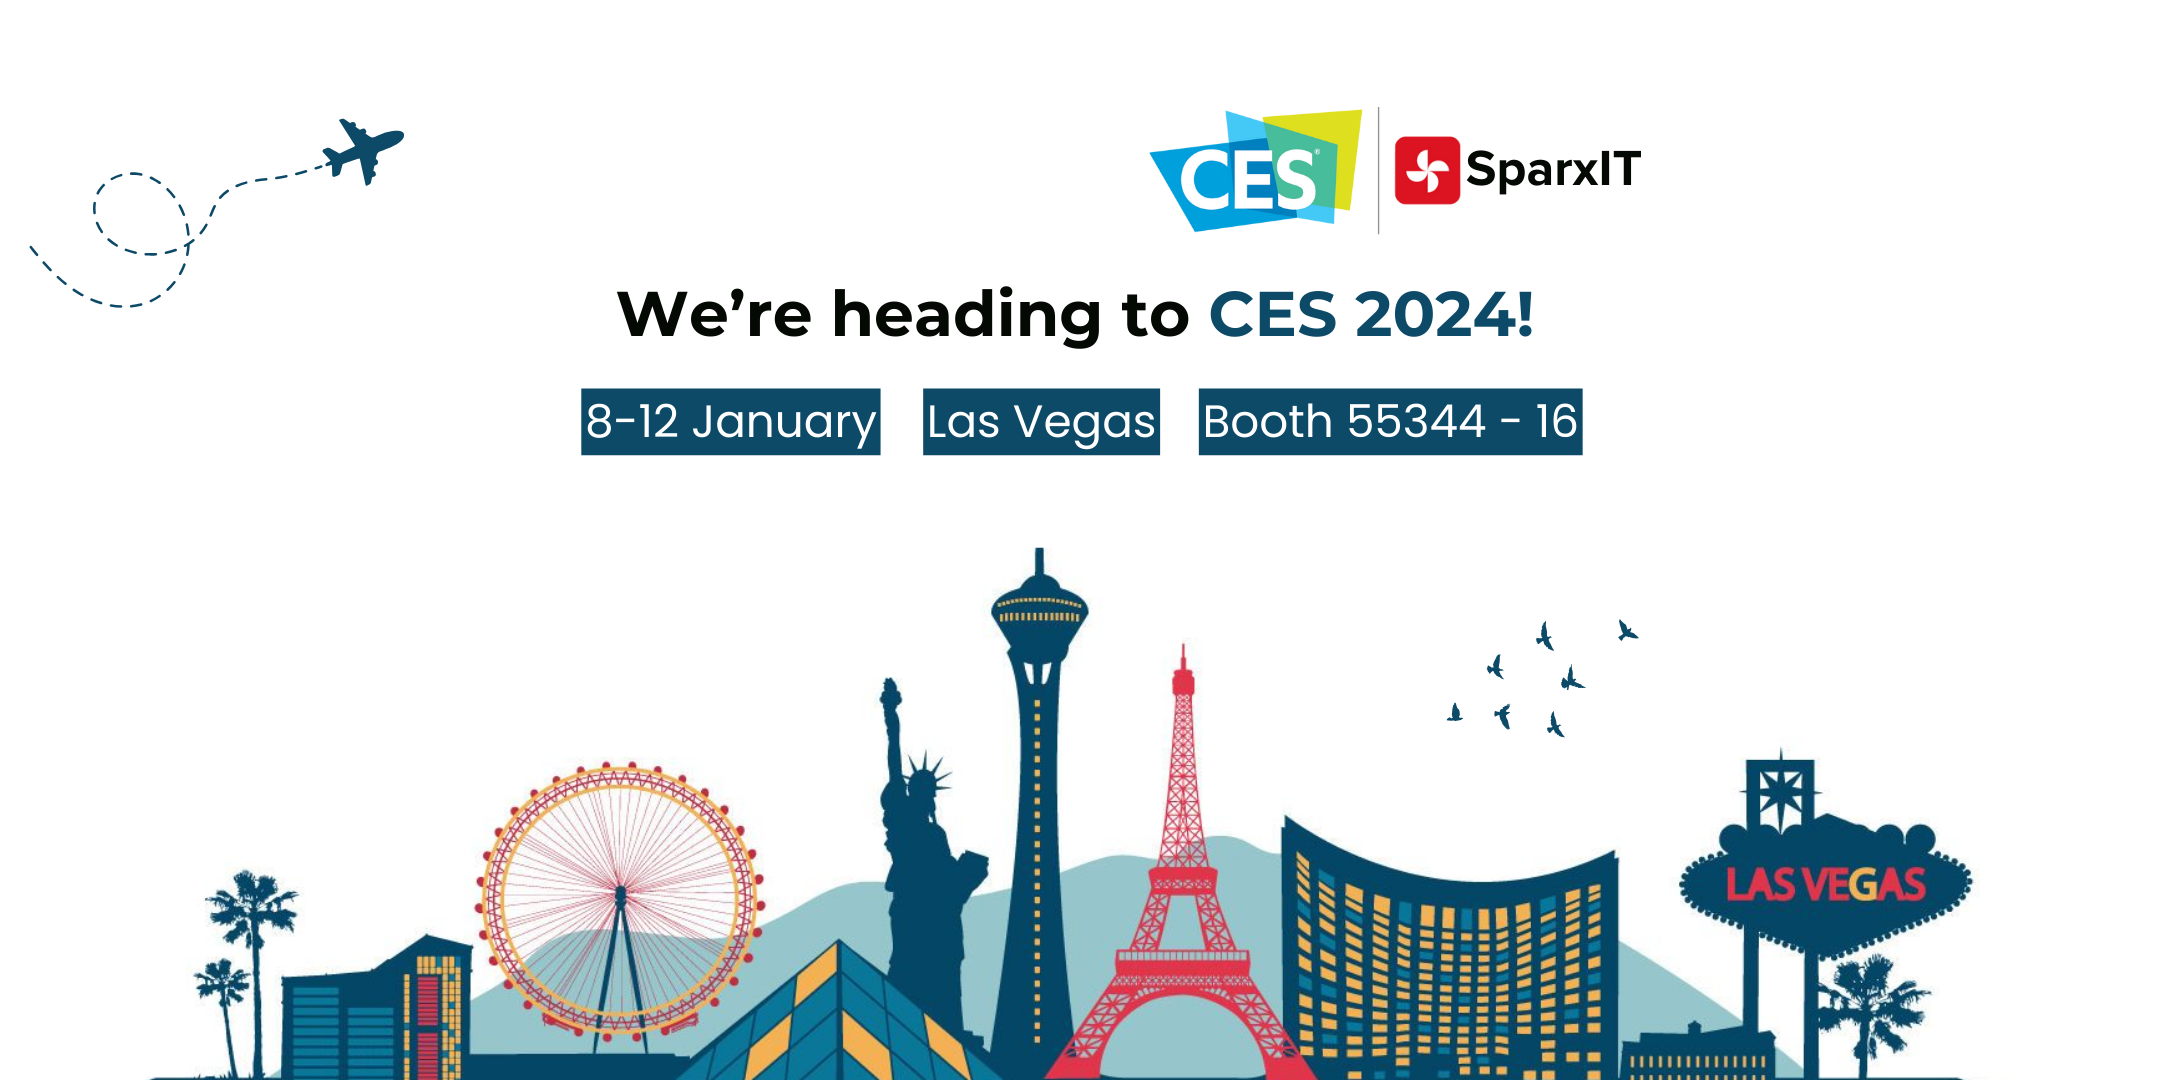 SparxIT Announces Participation in CES 2024: The Biggest Consumer Technology Show at Las Vegas